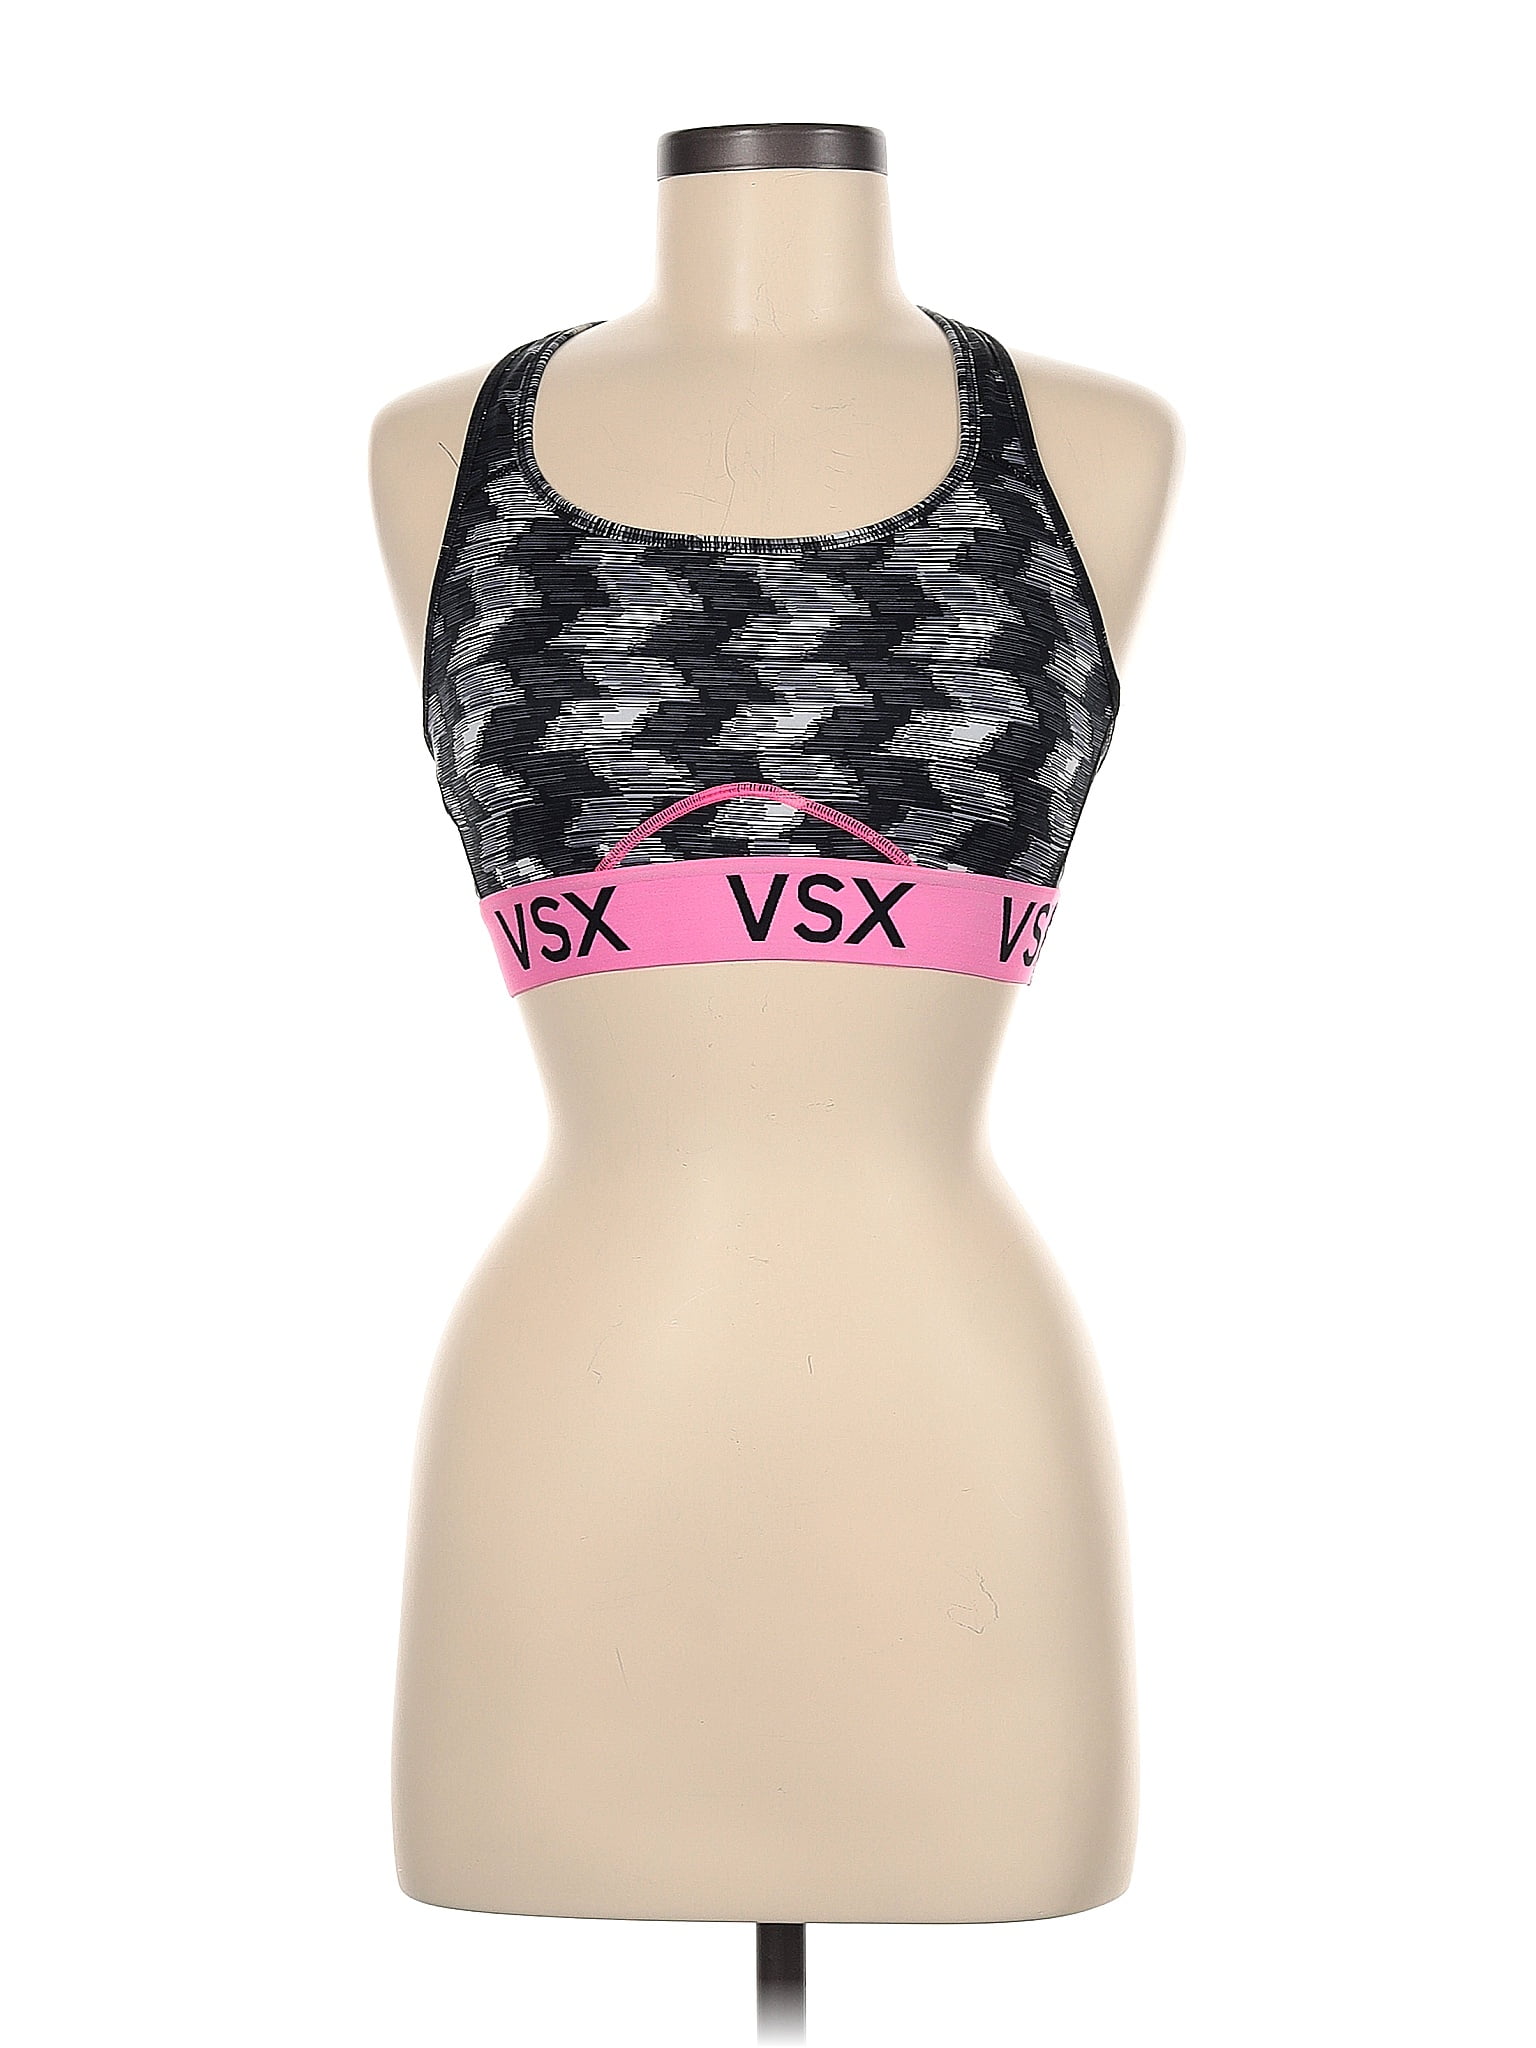 Victoria's Secret Pink Gray Sports Bra Size M - 36% off